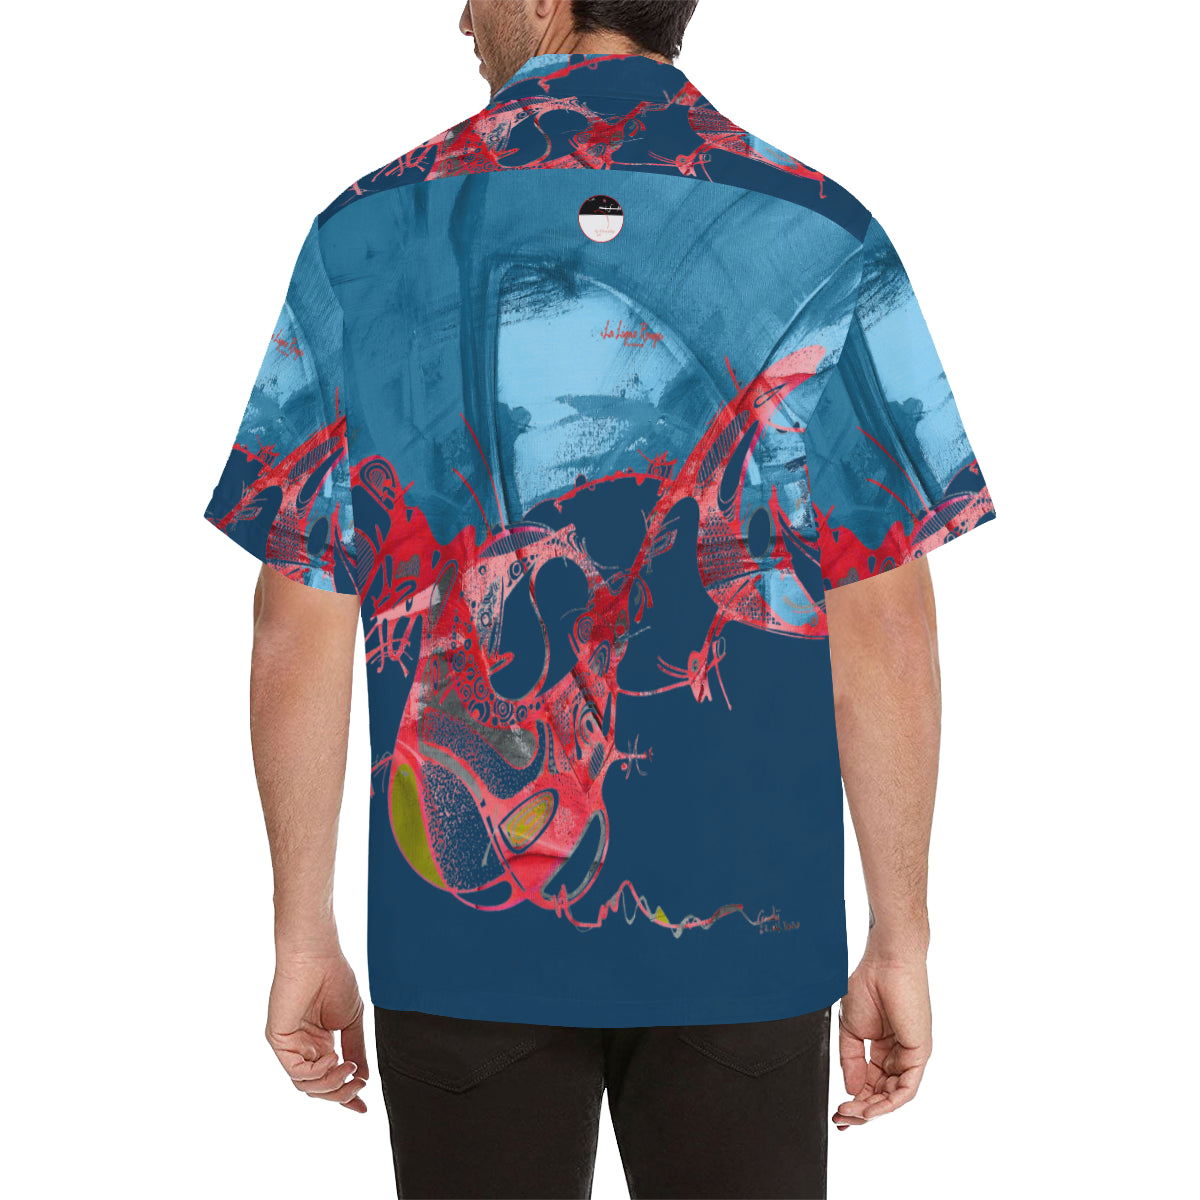 Camisa hawaiana "Sursoijean"